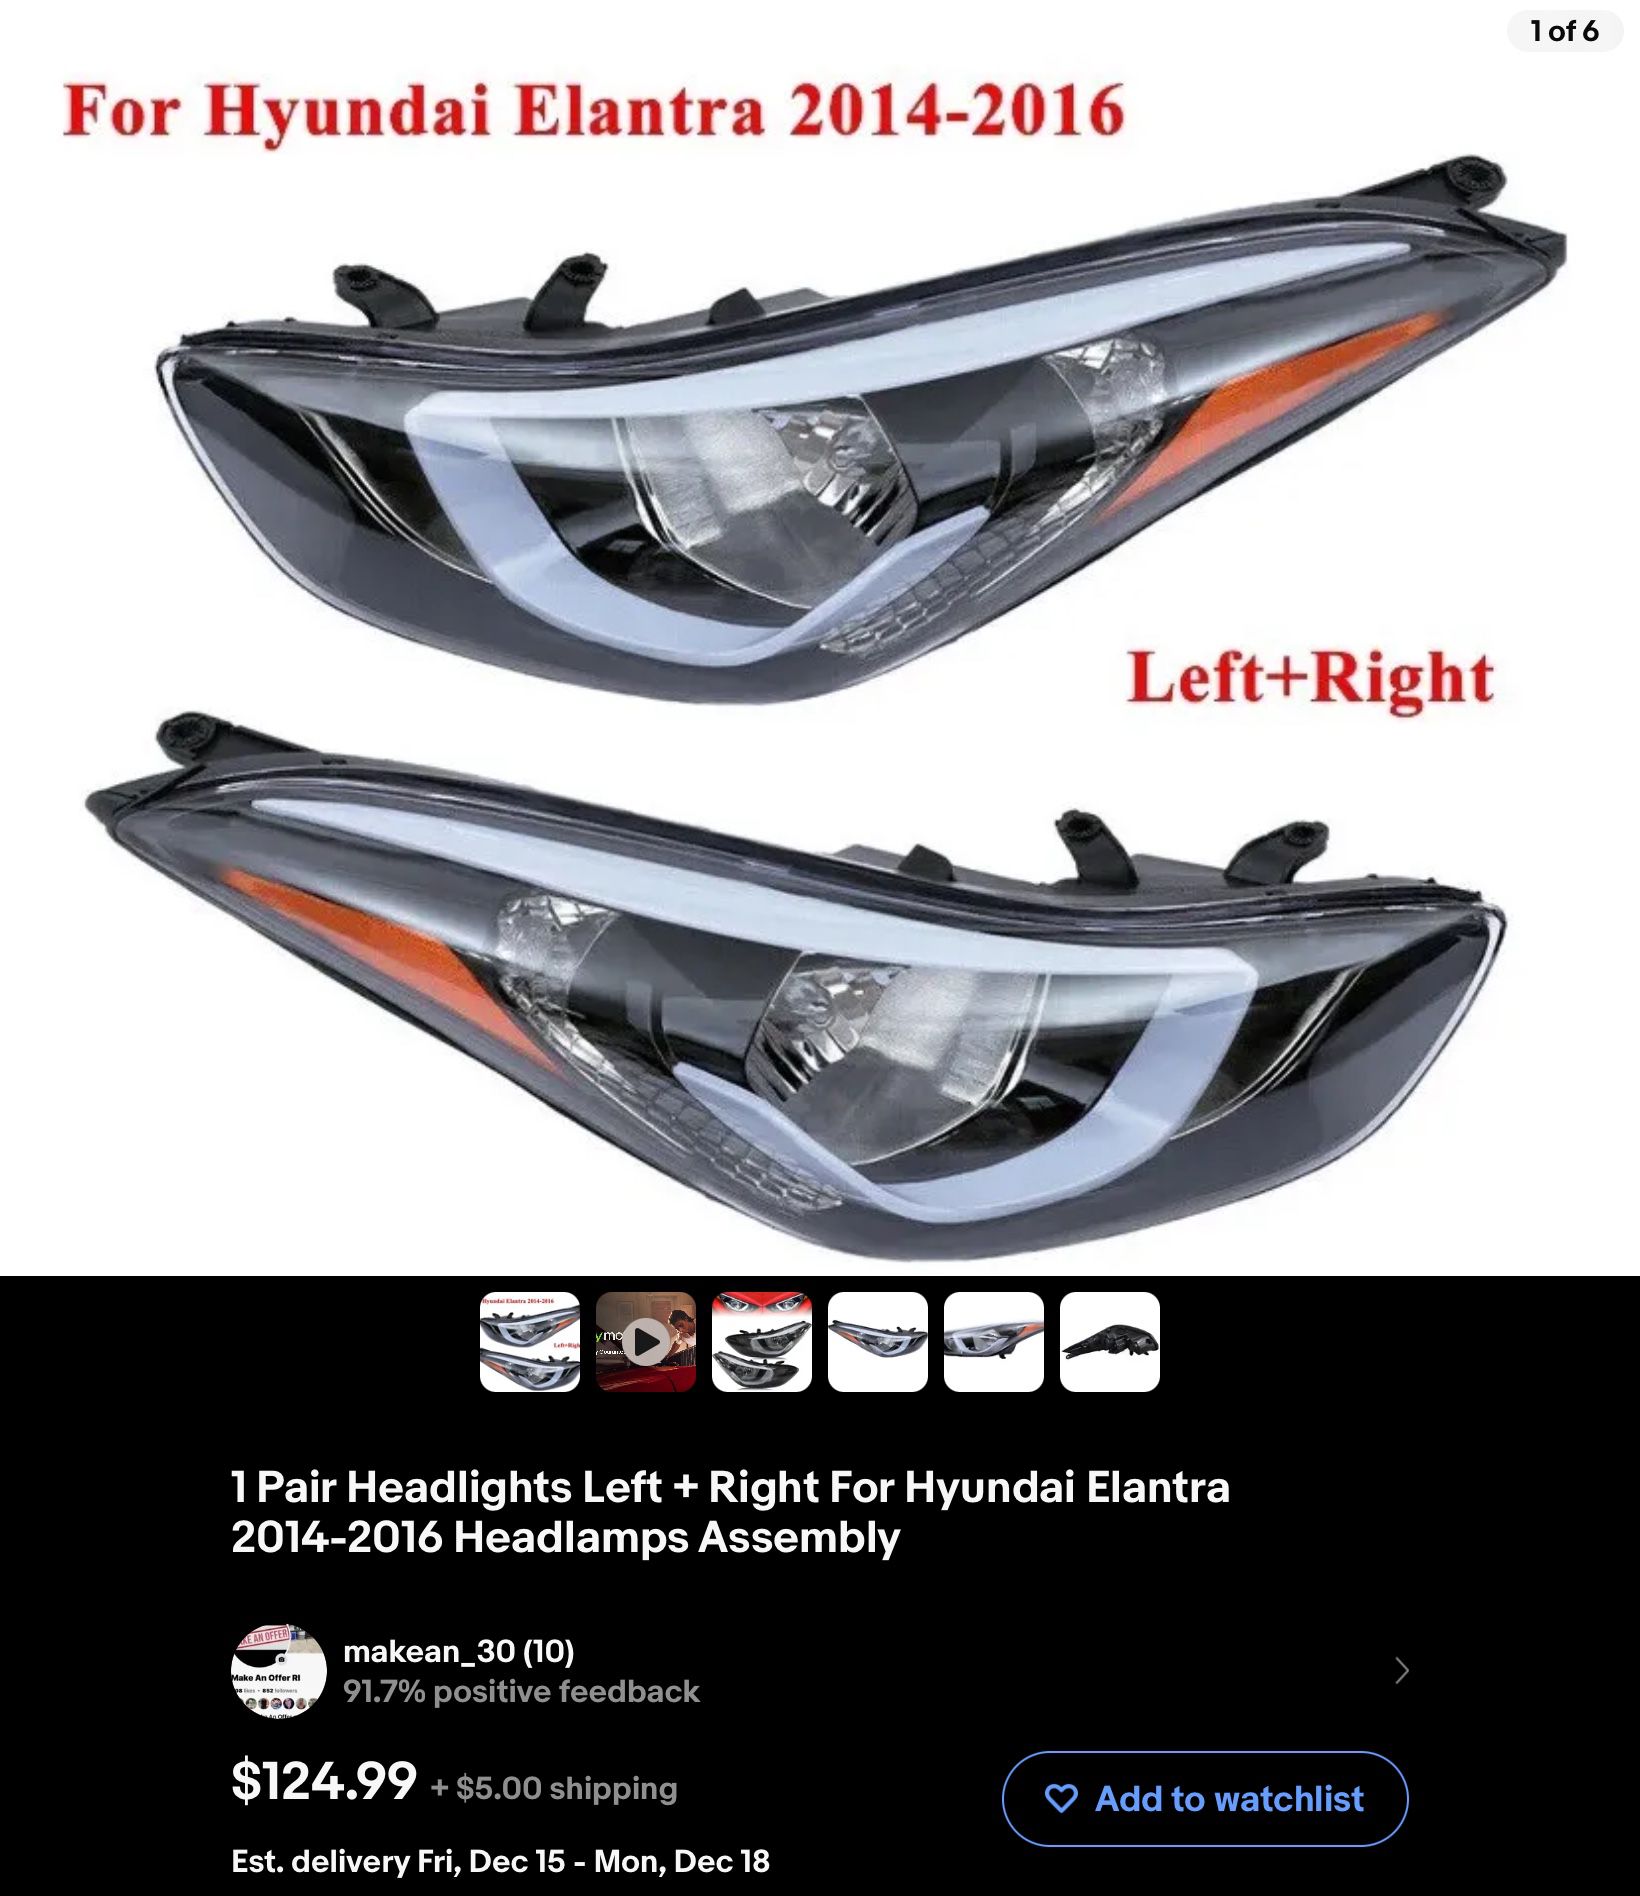 1 Pair Headlights Left + Right For Hyundai Elantra 2014-2016 Headlamps Assembly